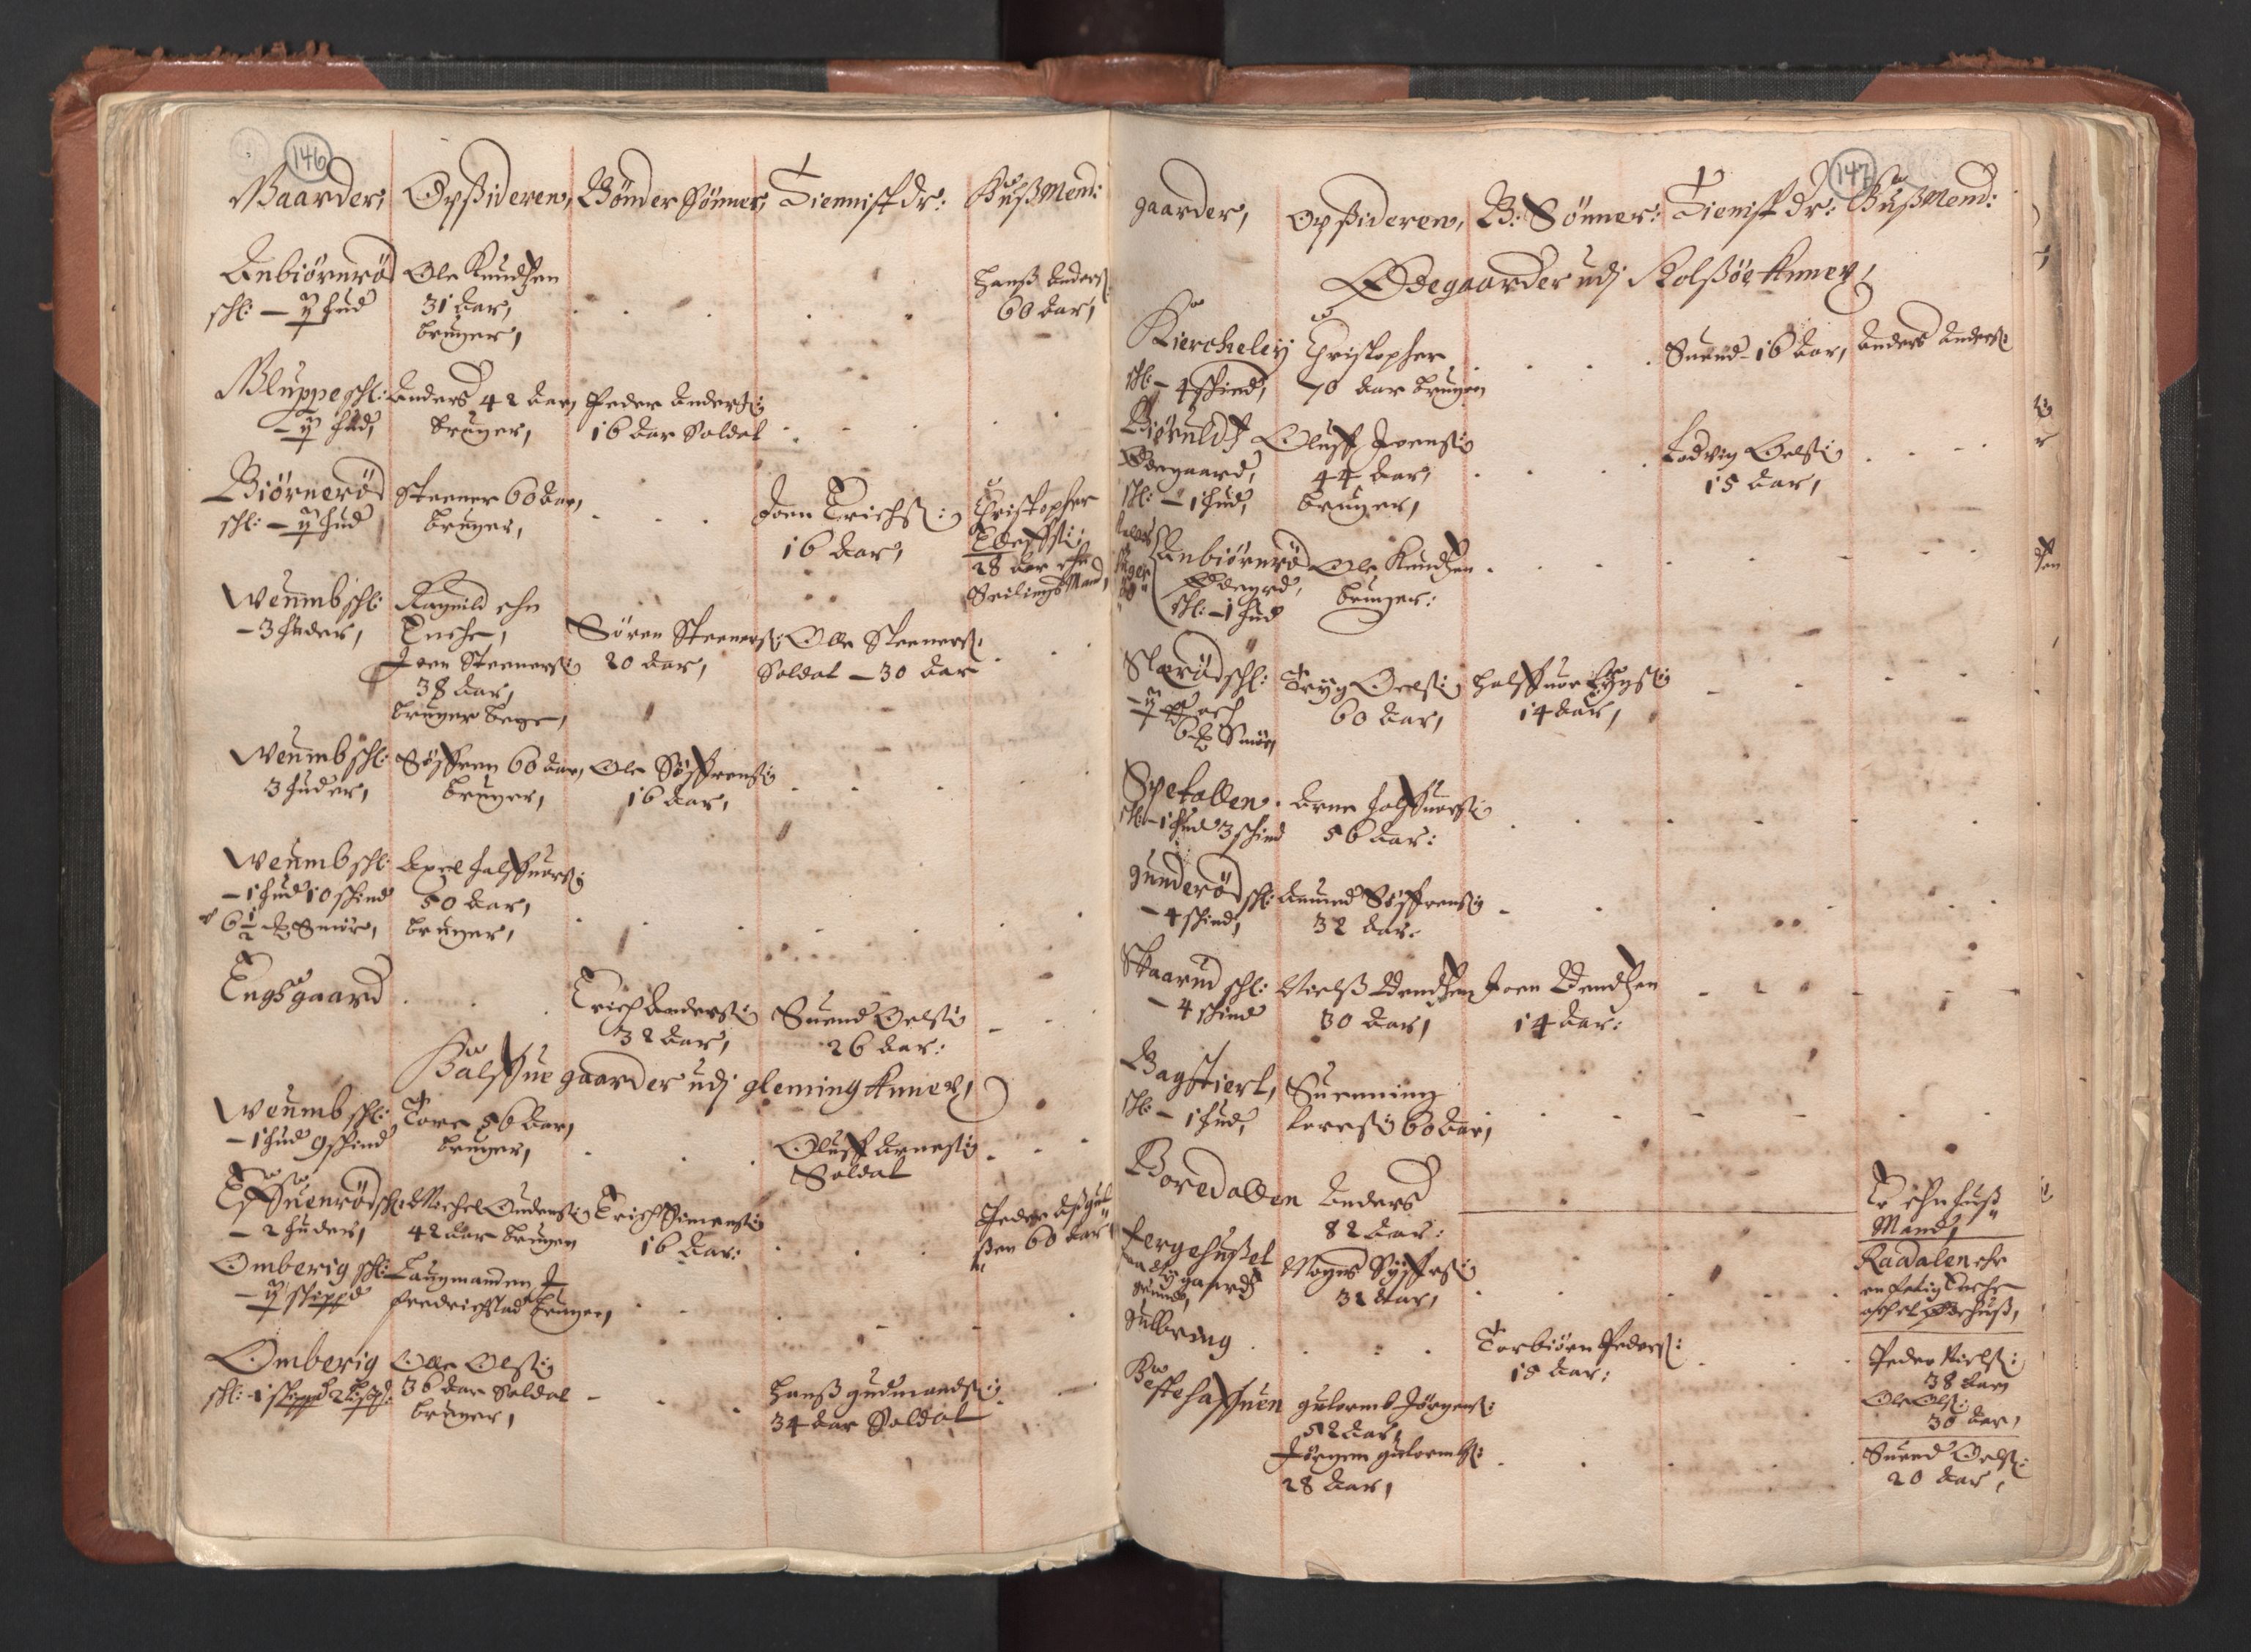 RA, Fogdenes og sorenskrivernes manntall 1664-1666, nr. 1: Fogderier (len og skipreider) i nåværende Østfold fylke, 1664, s. 146-147